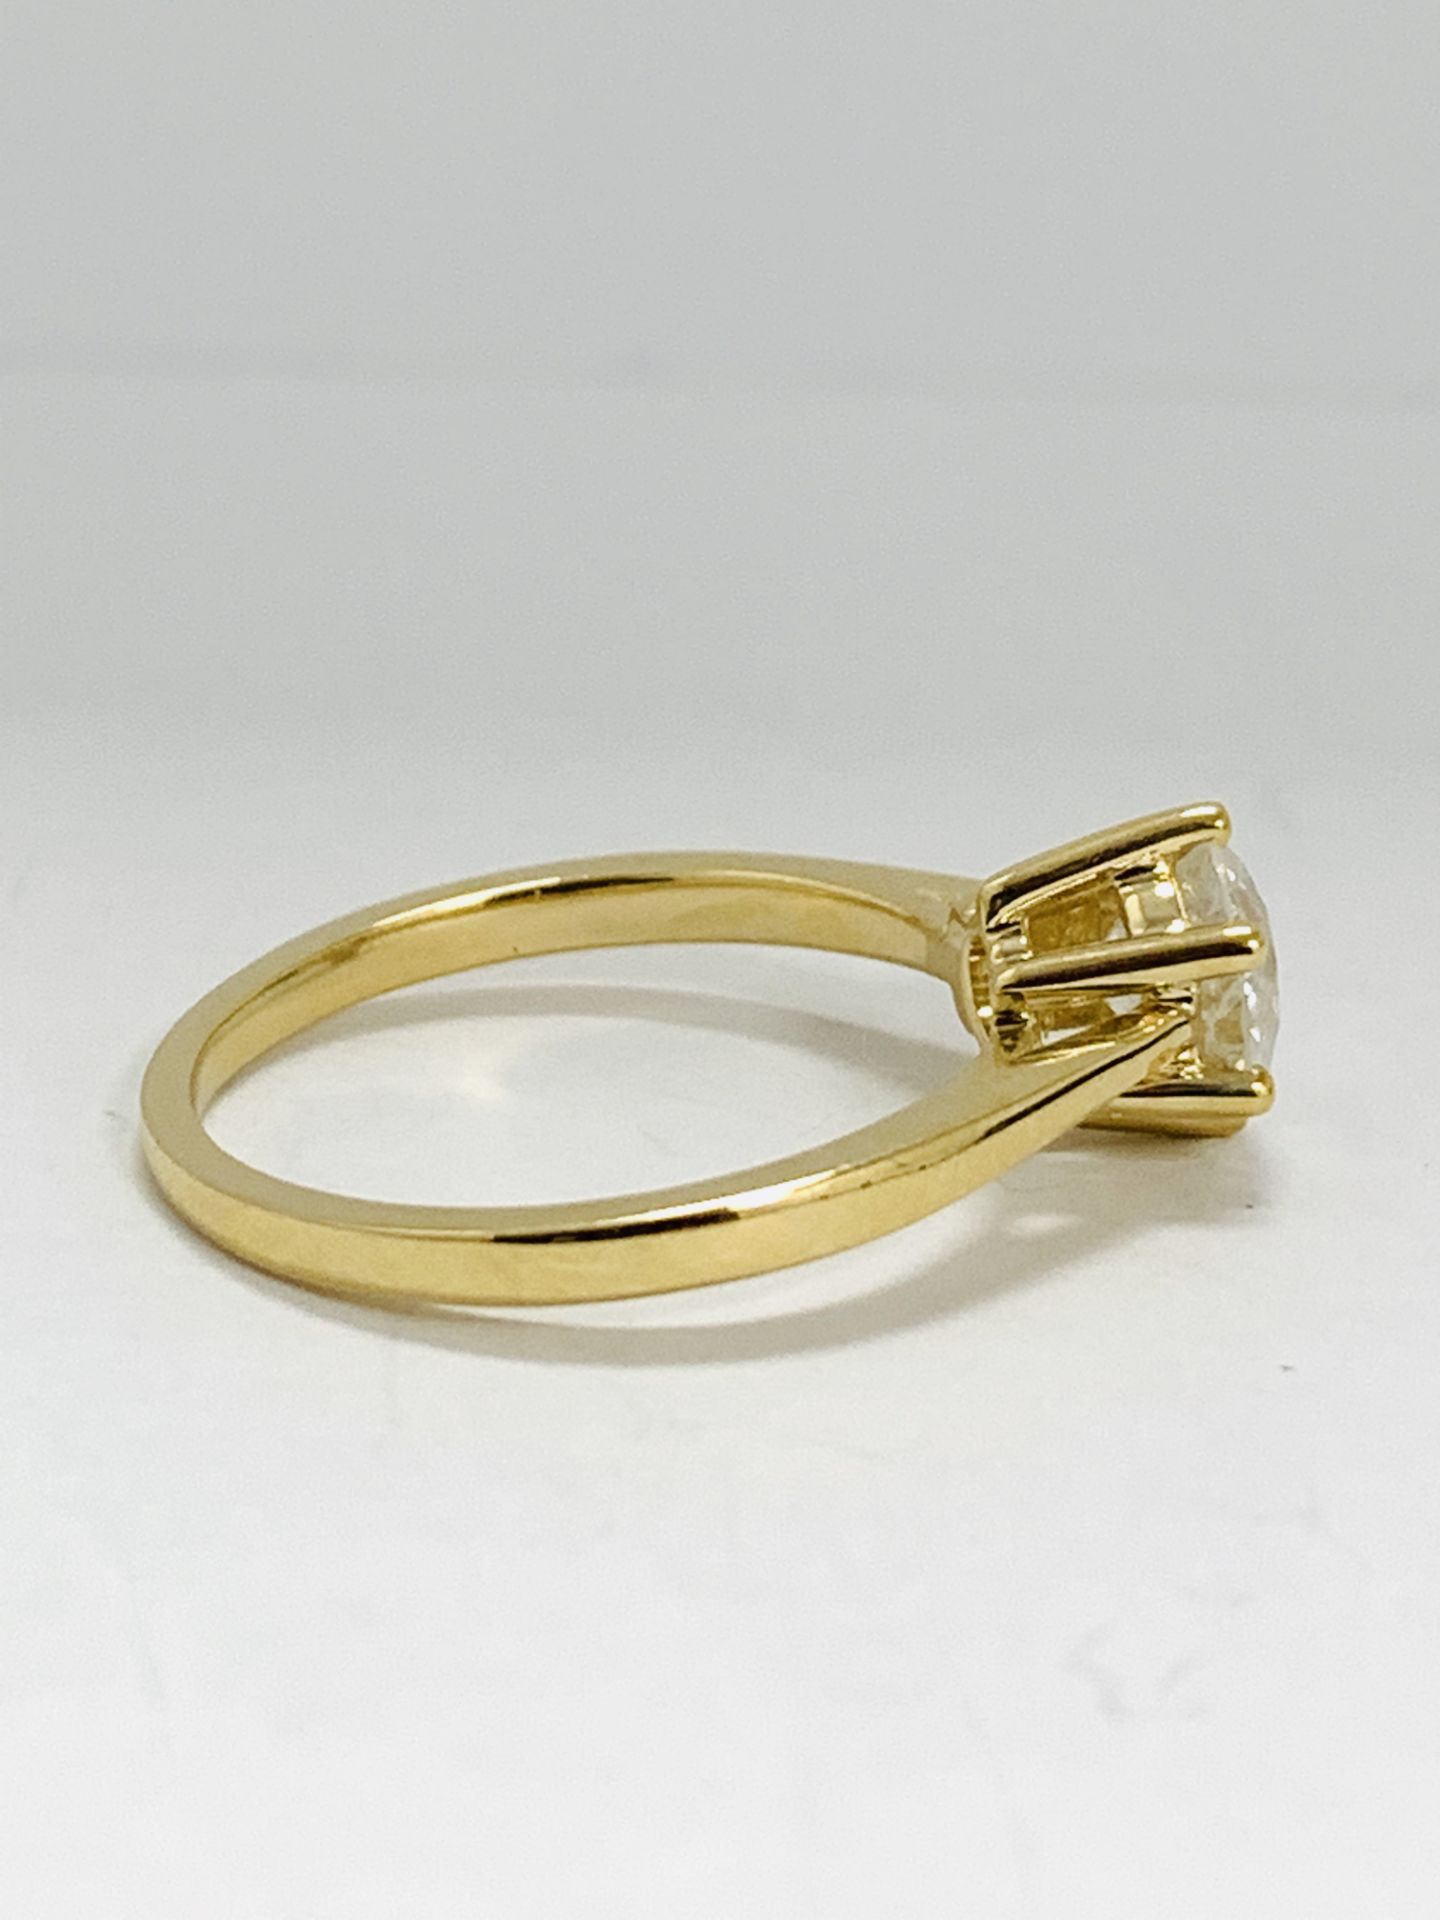 14K Yellow Gold Ring - Image 5 of 9